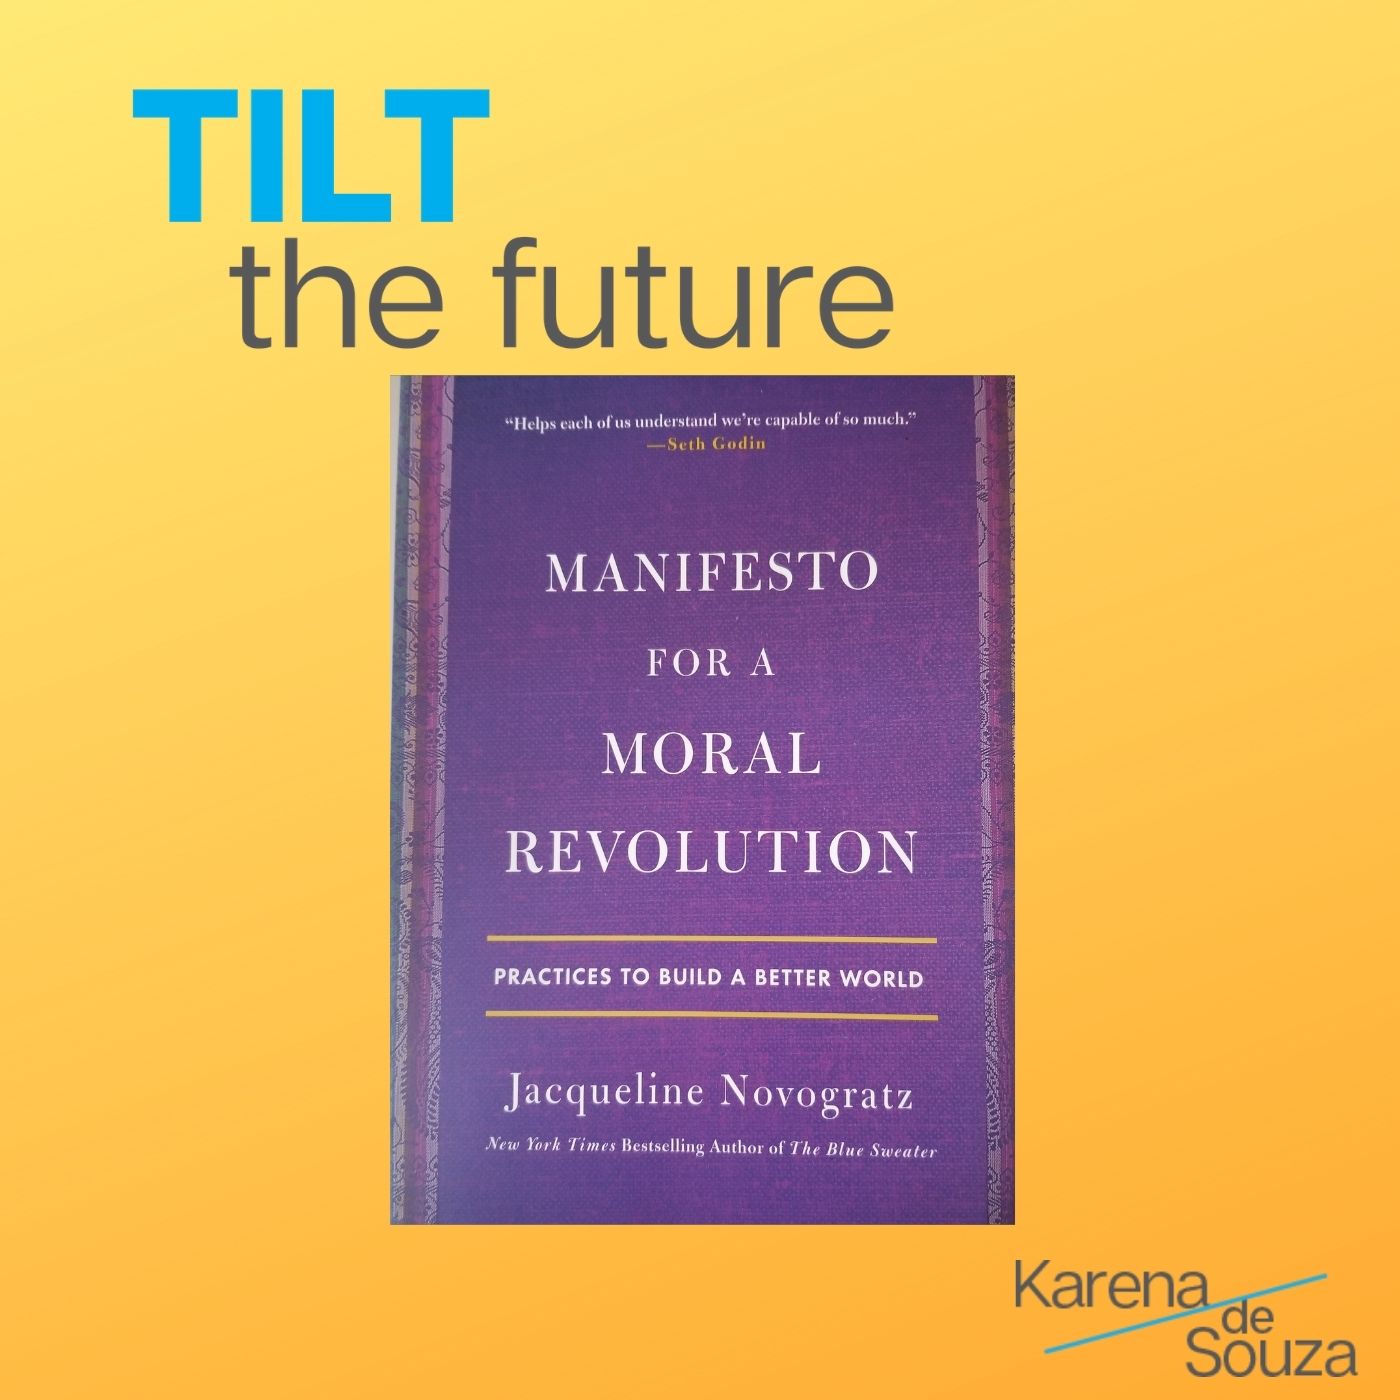 I believe Manifesto for a moral revolution purple book cover